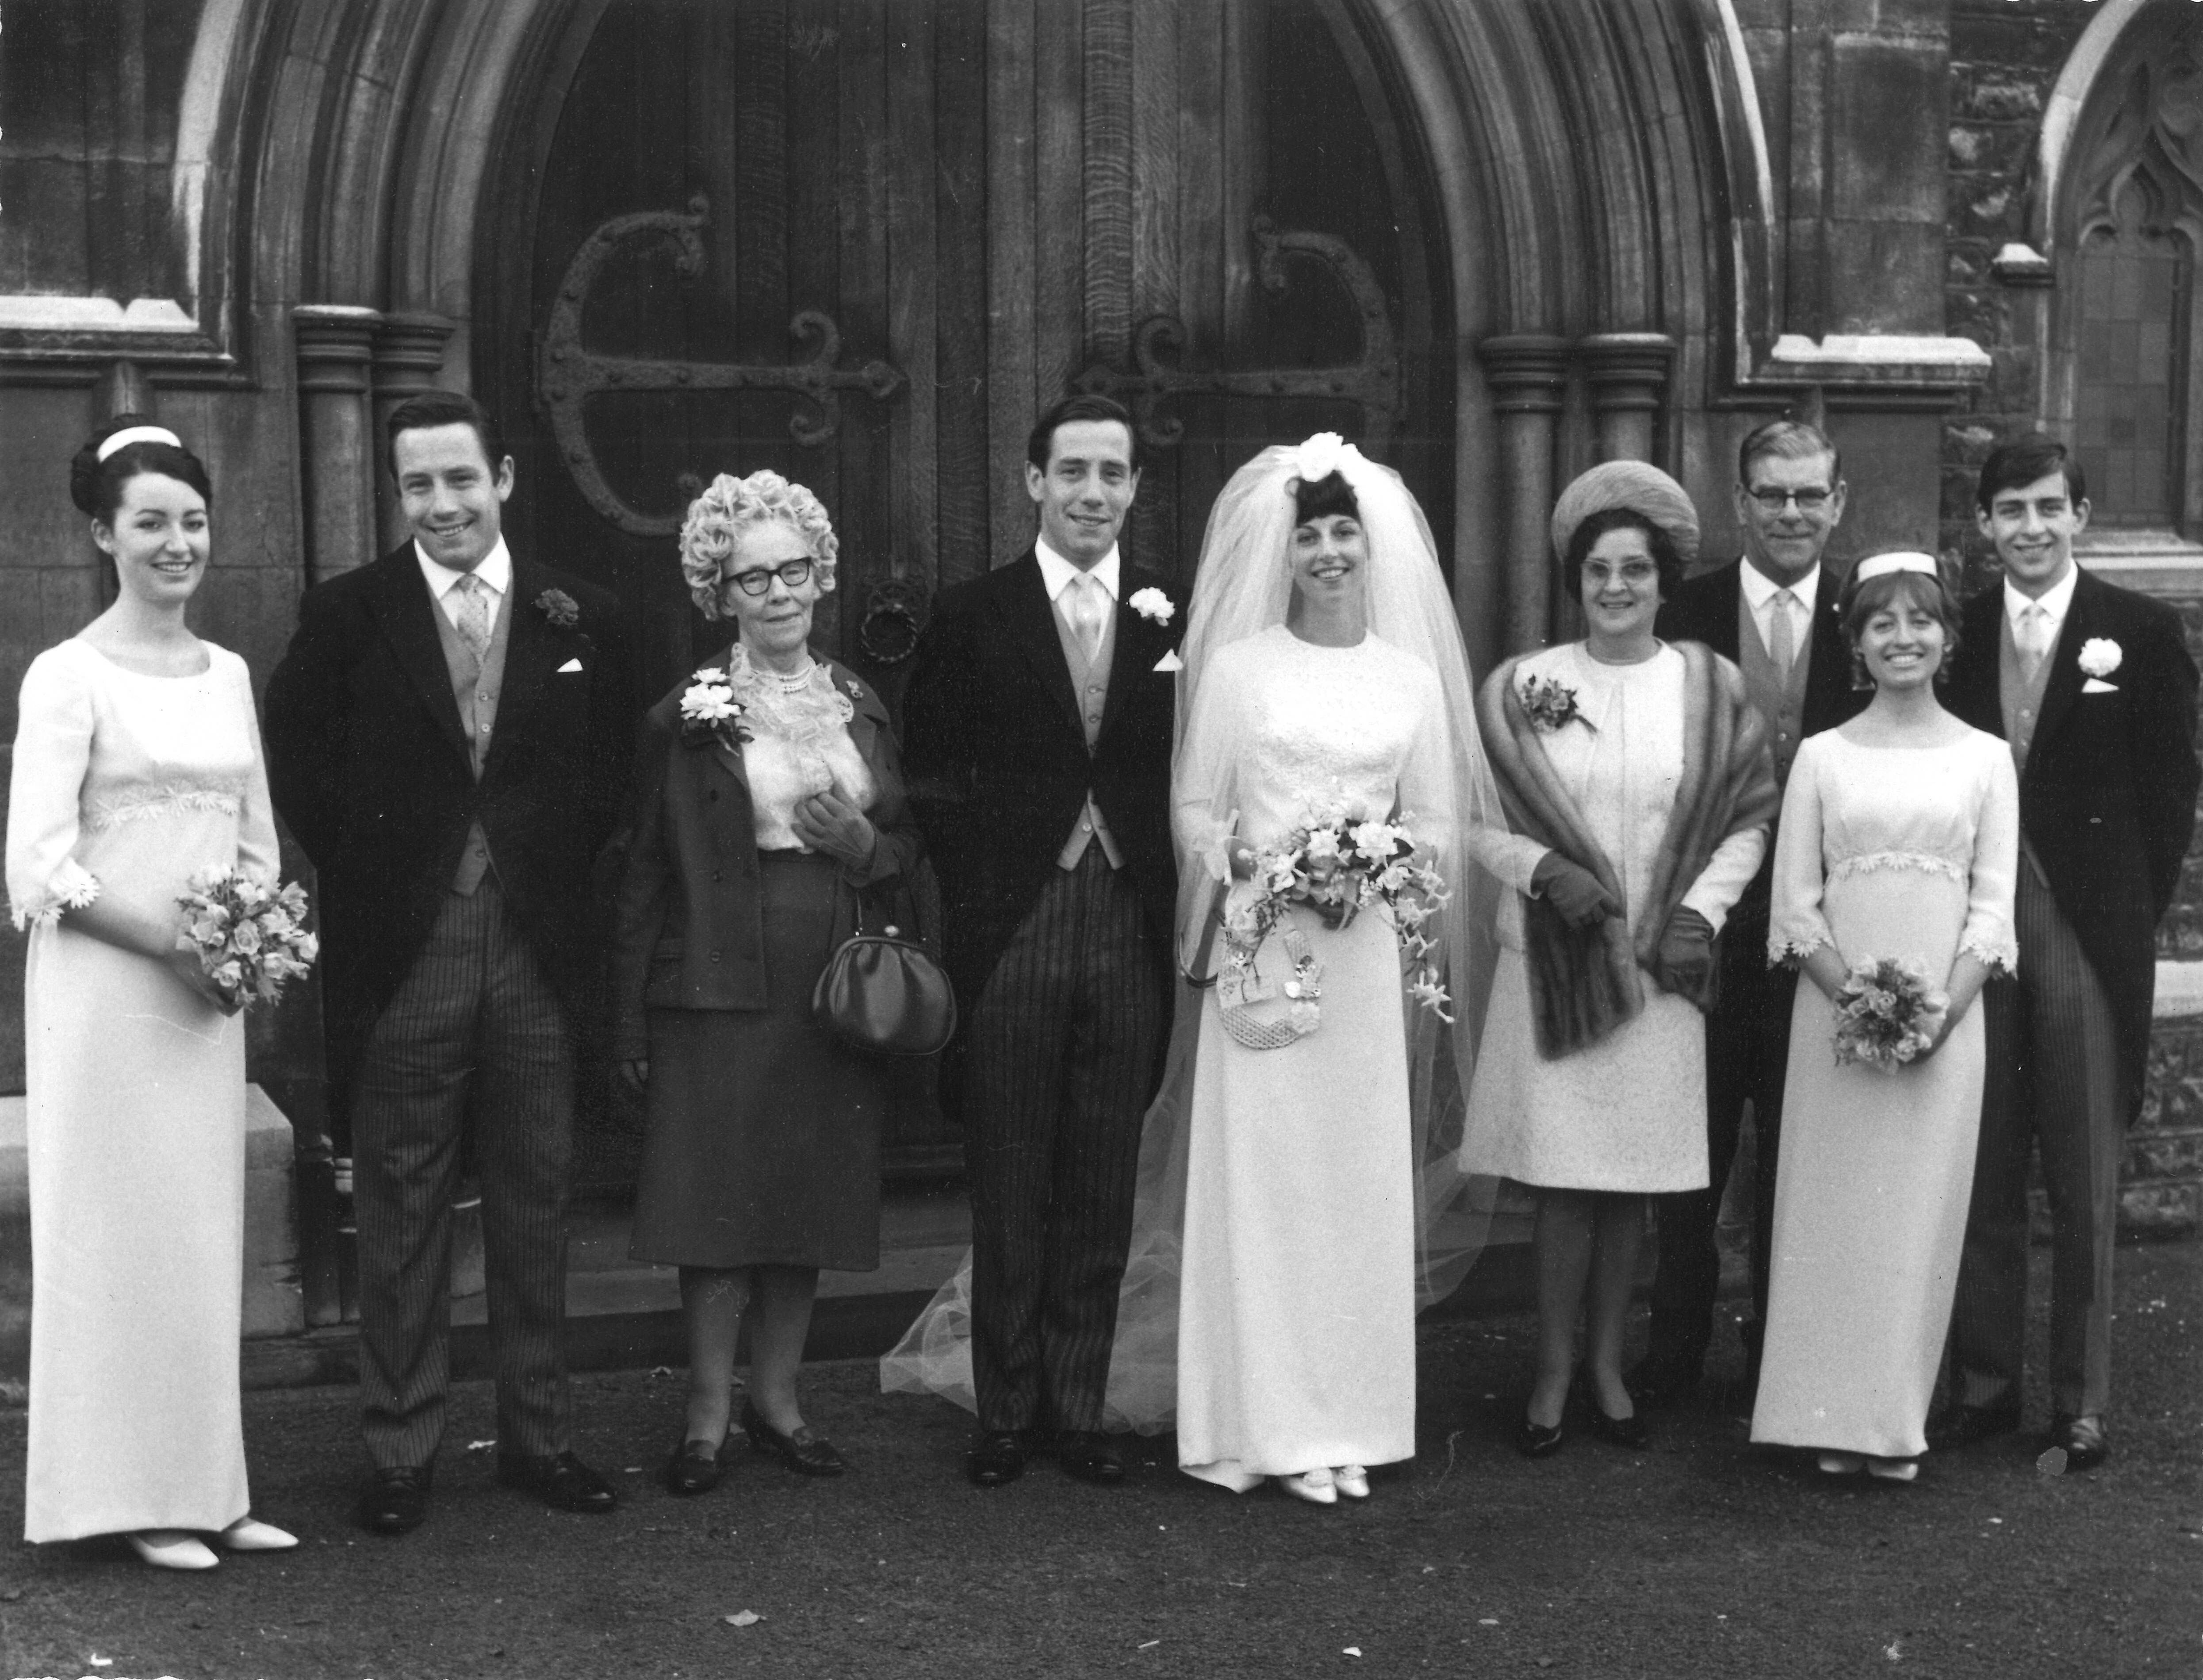 Sue Perkins' parents, Bert and Ann Perkins' wedding photo 